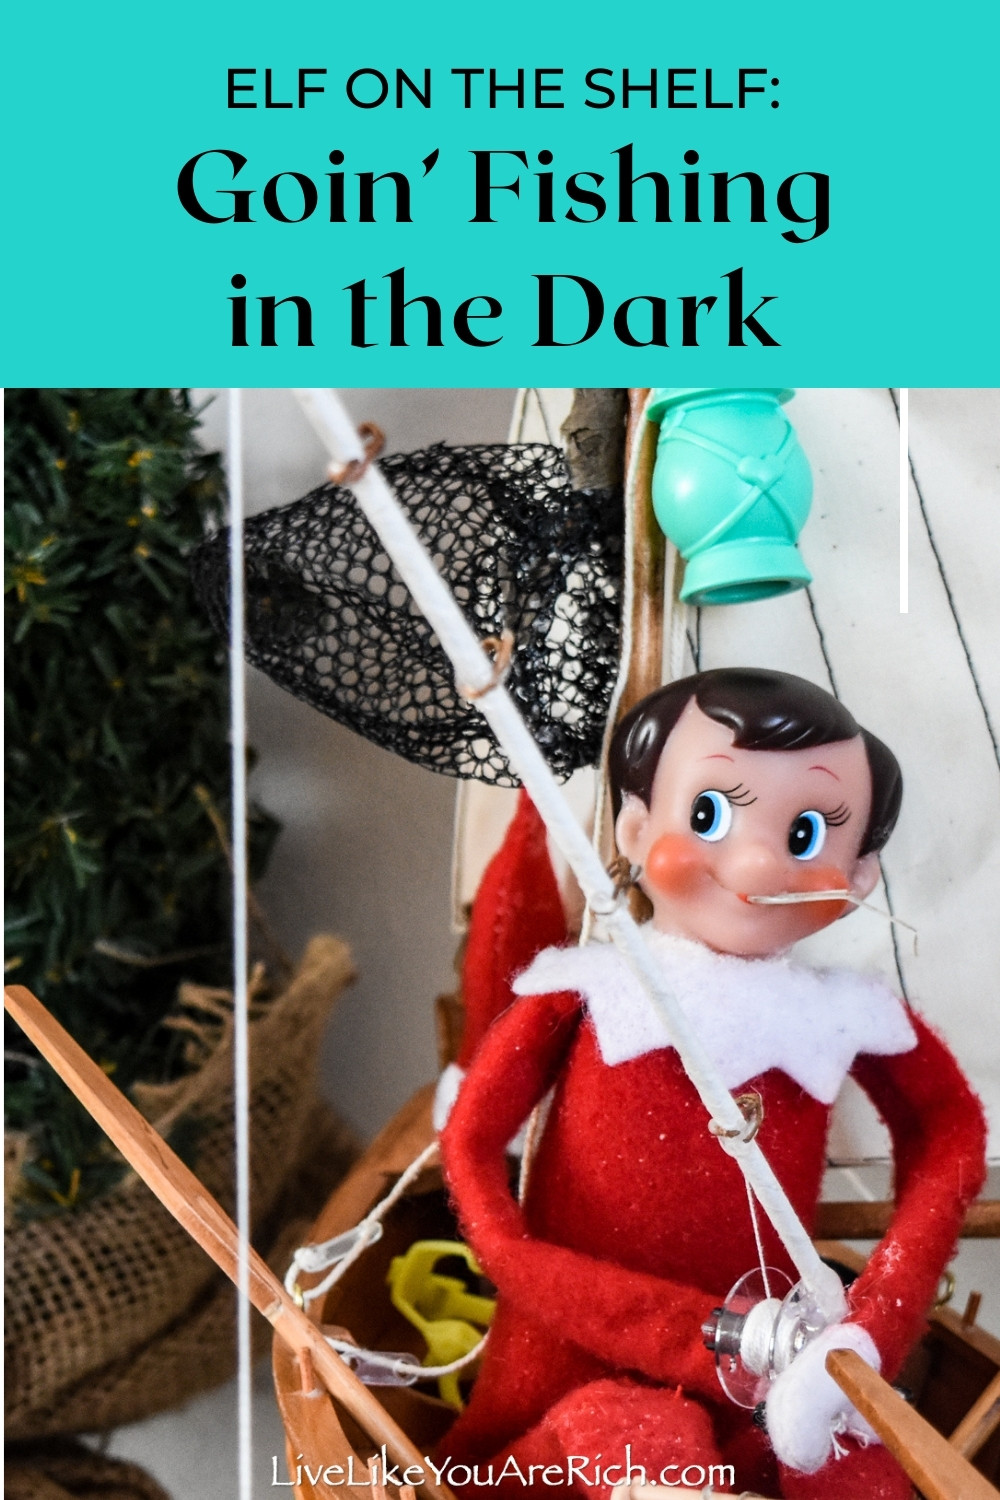 Elf on the Shelf: Goin' Fishing in the Dark